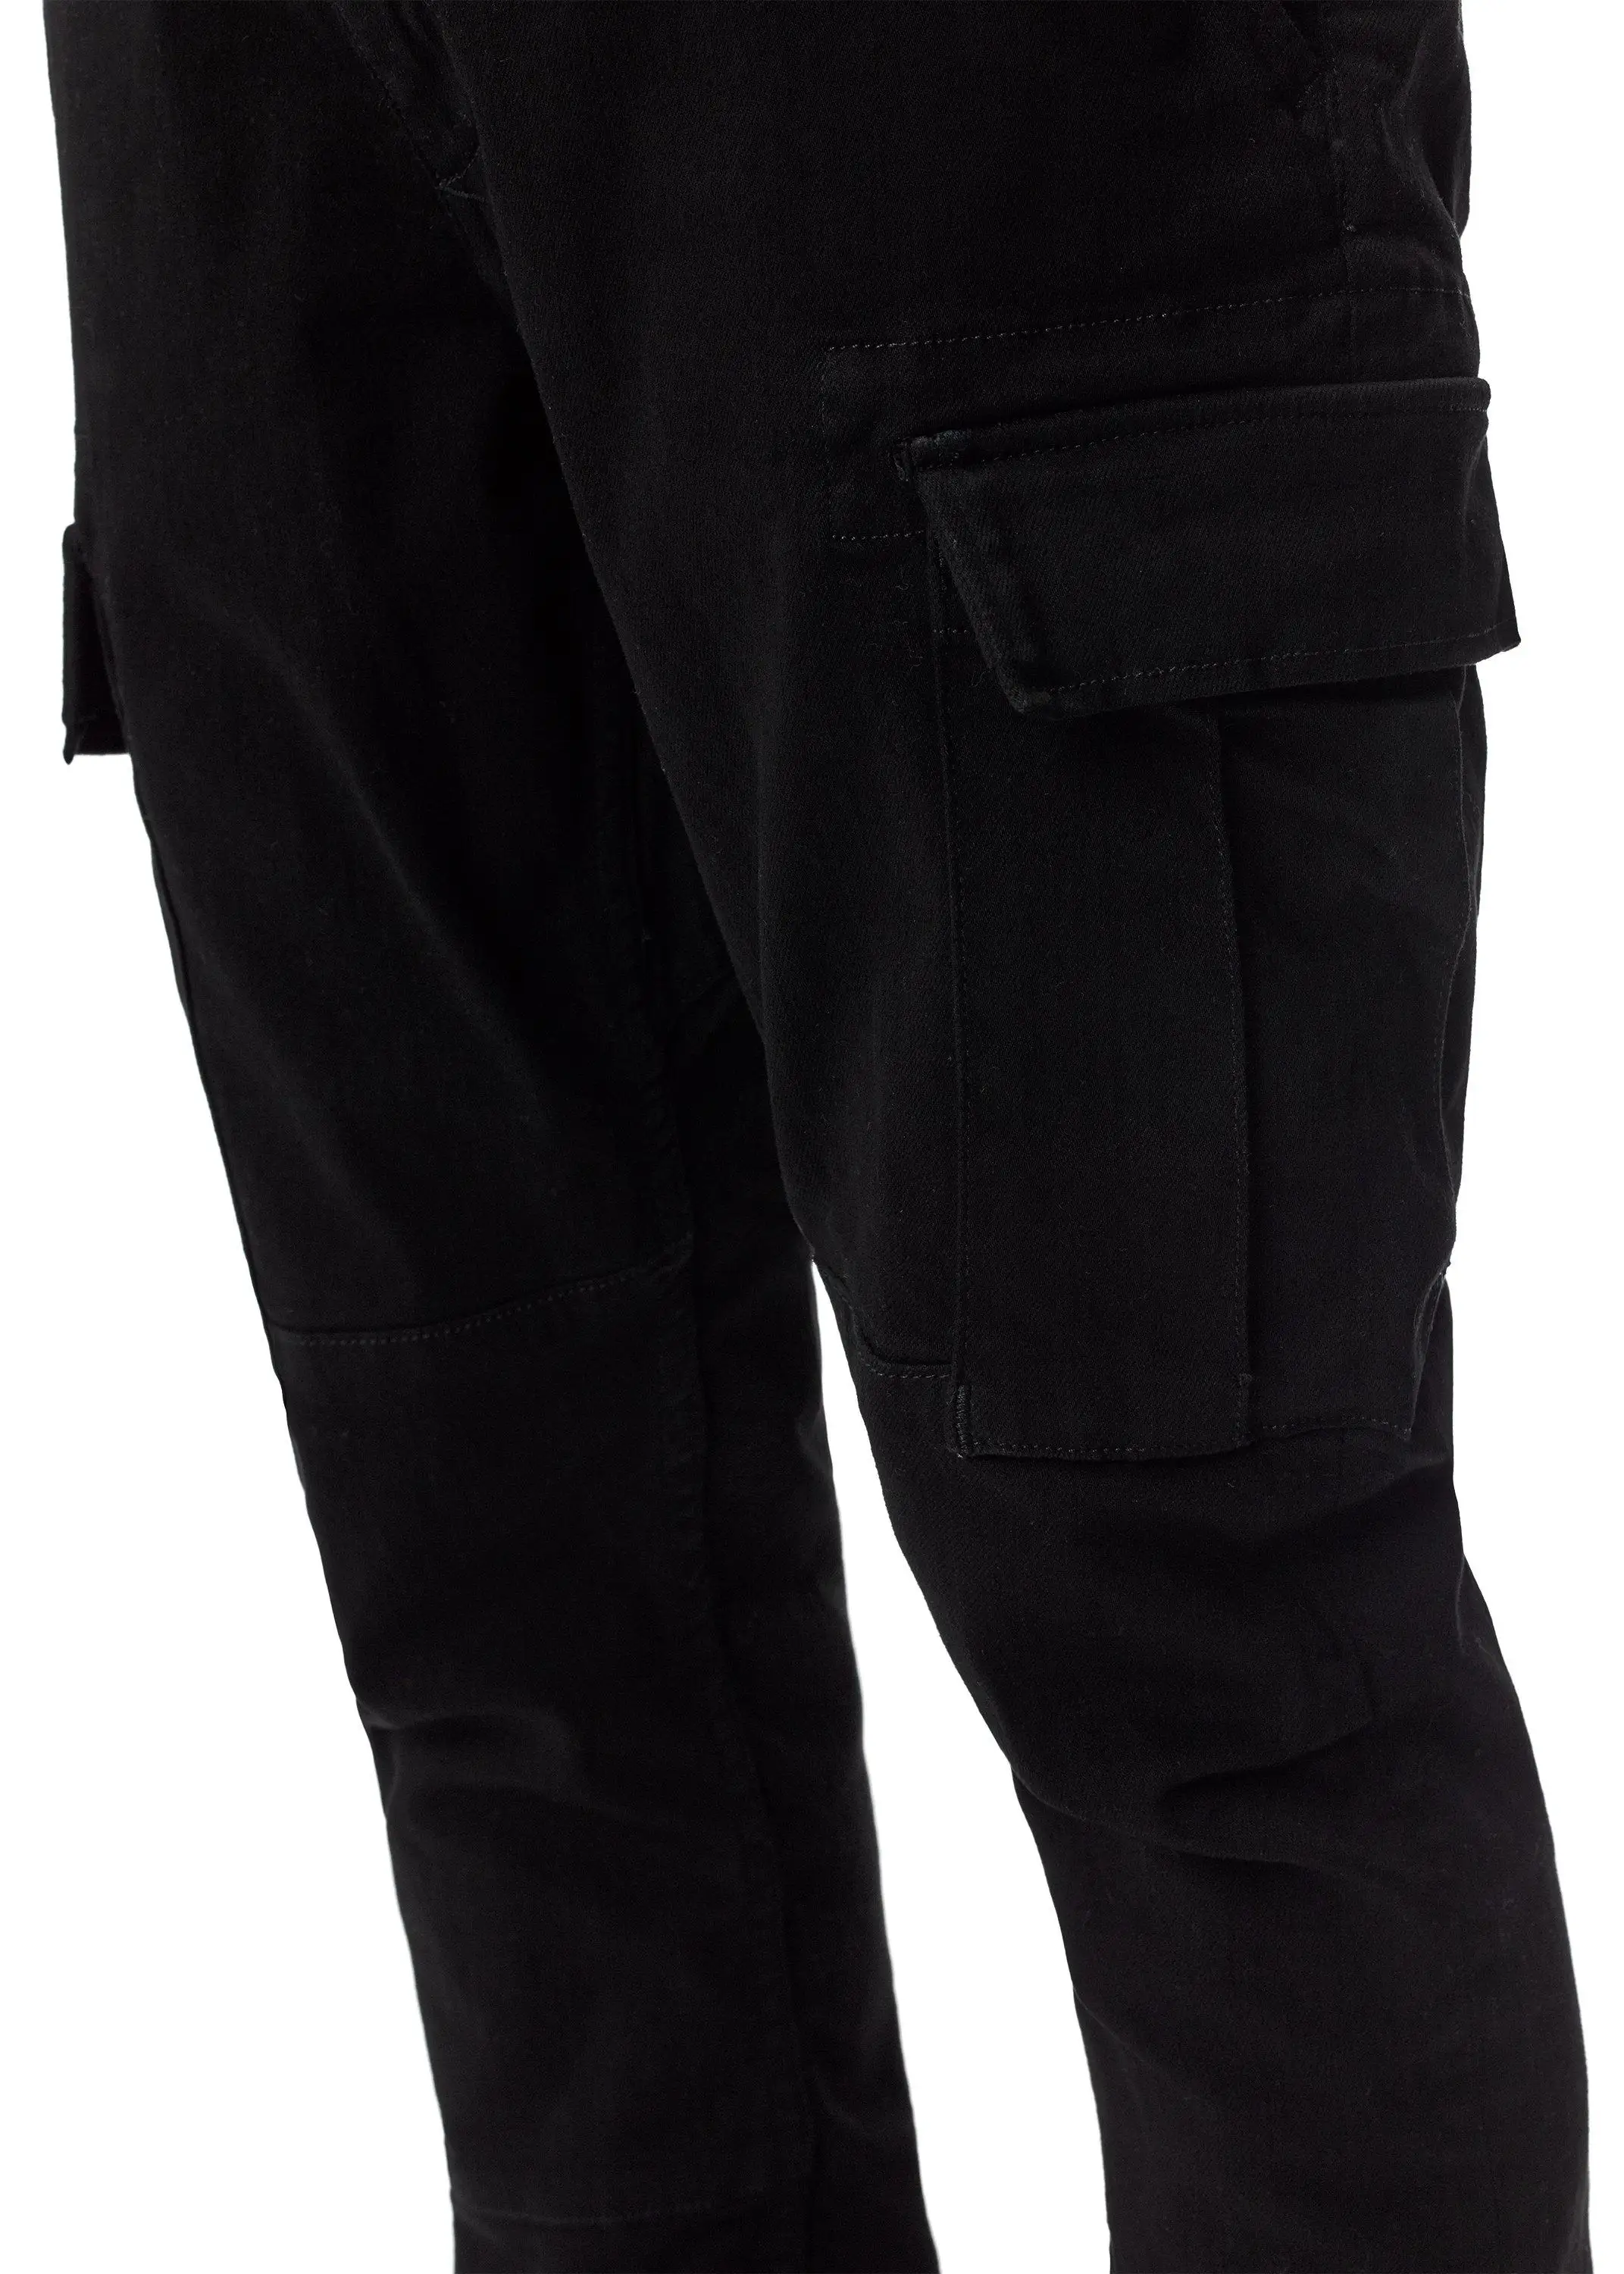 Diznew Custom Fashion Black Stretch Denim Pant Cargo Jeans Men - Buy ...